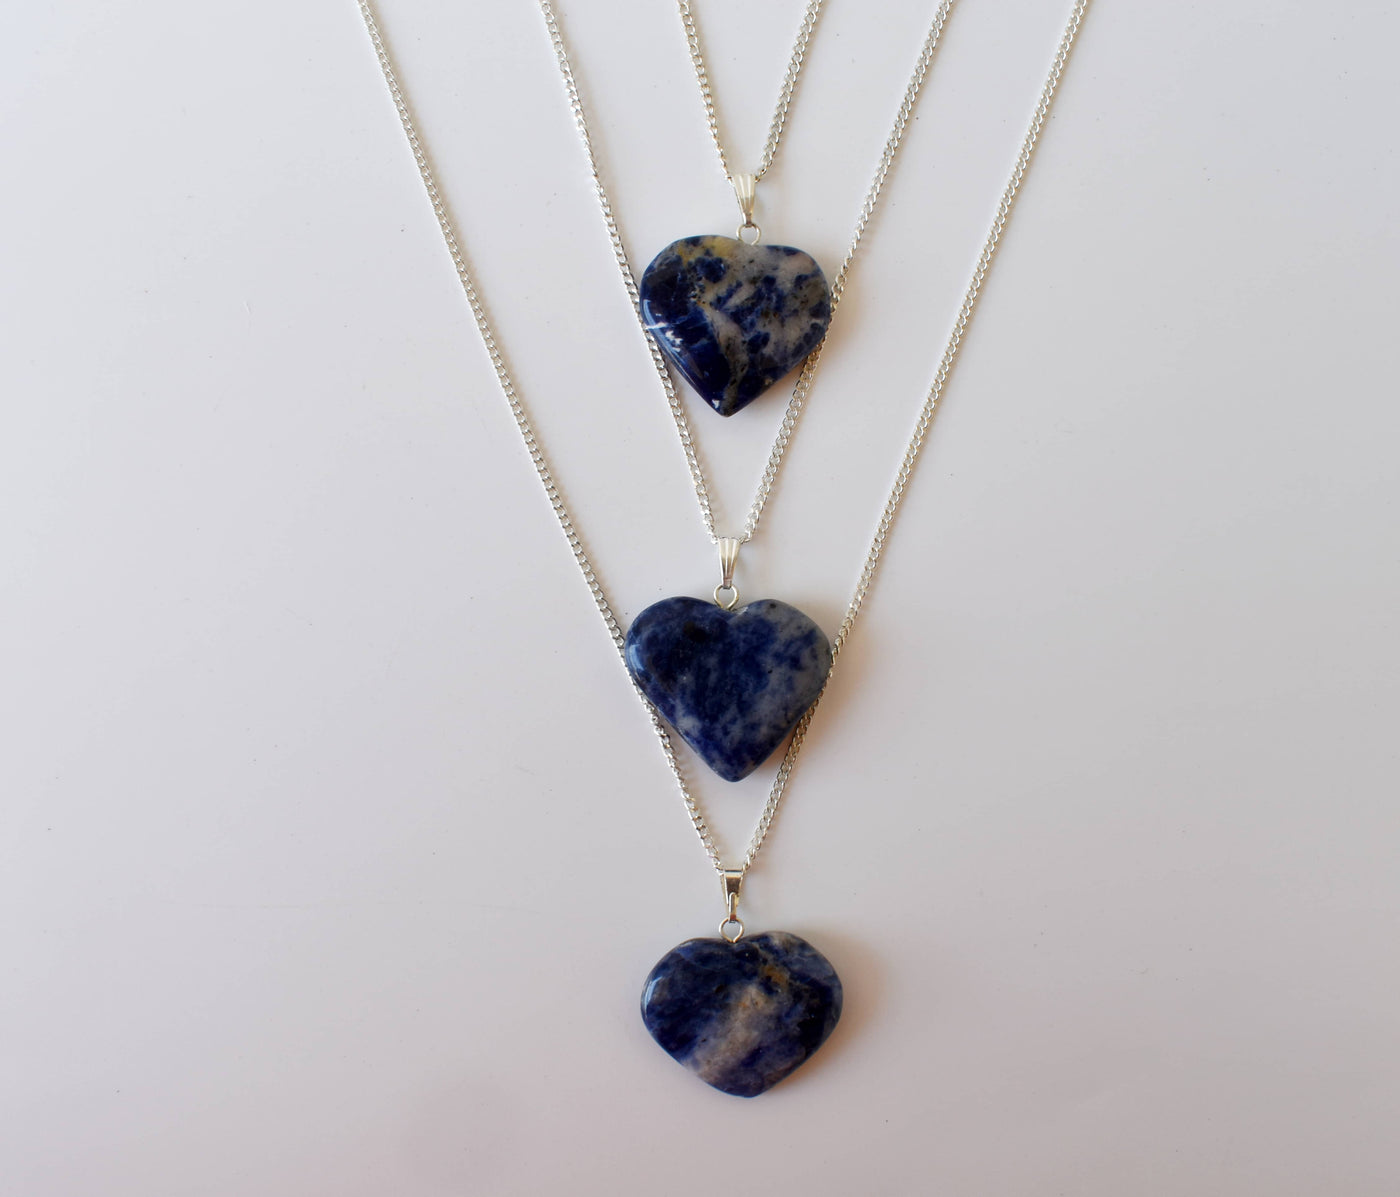 Véritable pendentif cœur en cristal Sodalite, véritables colliers en forme de cœur, breloque en pierres précieuses polies